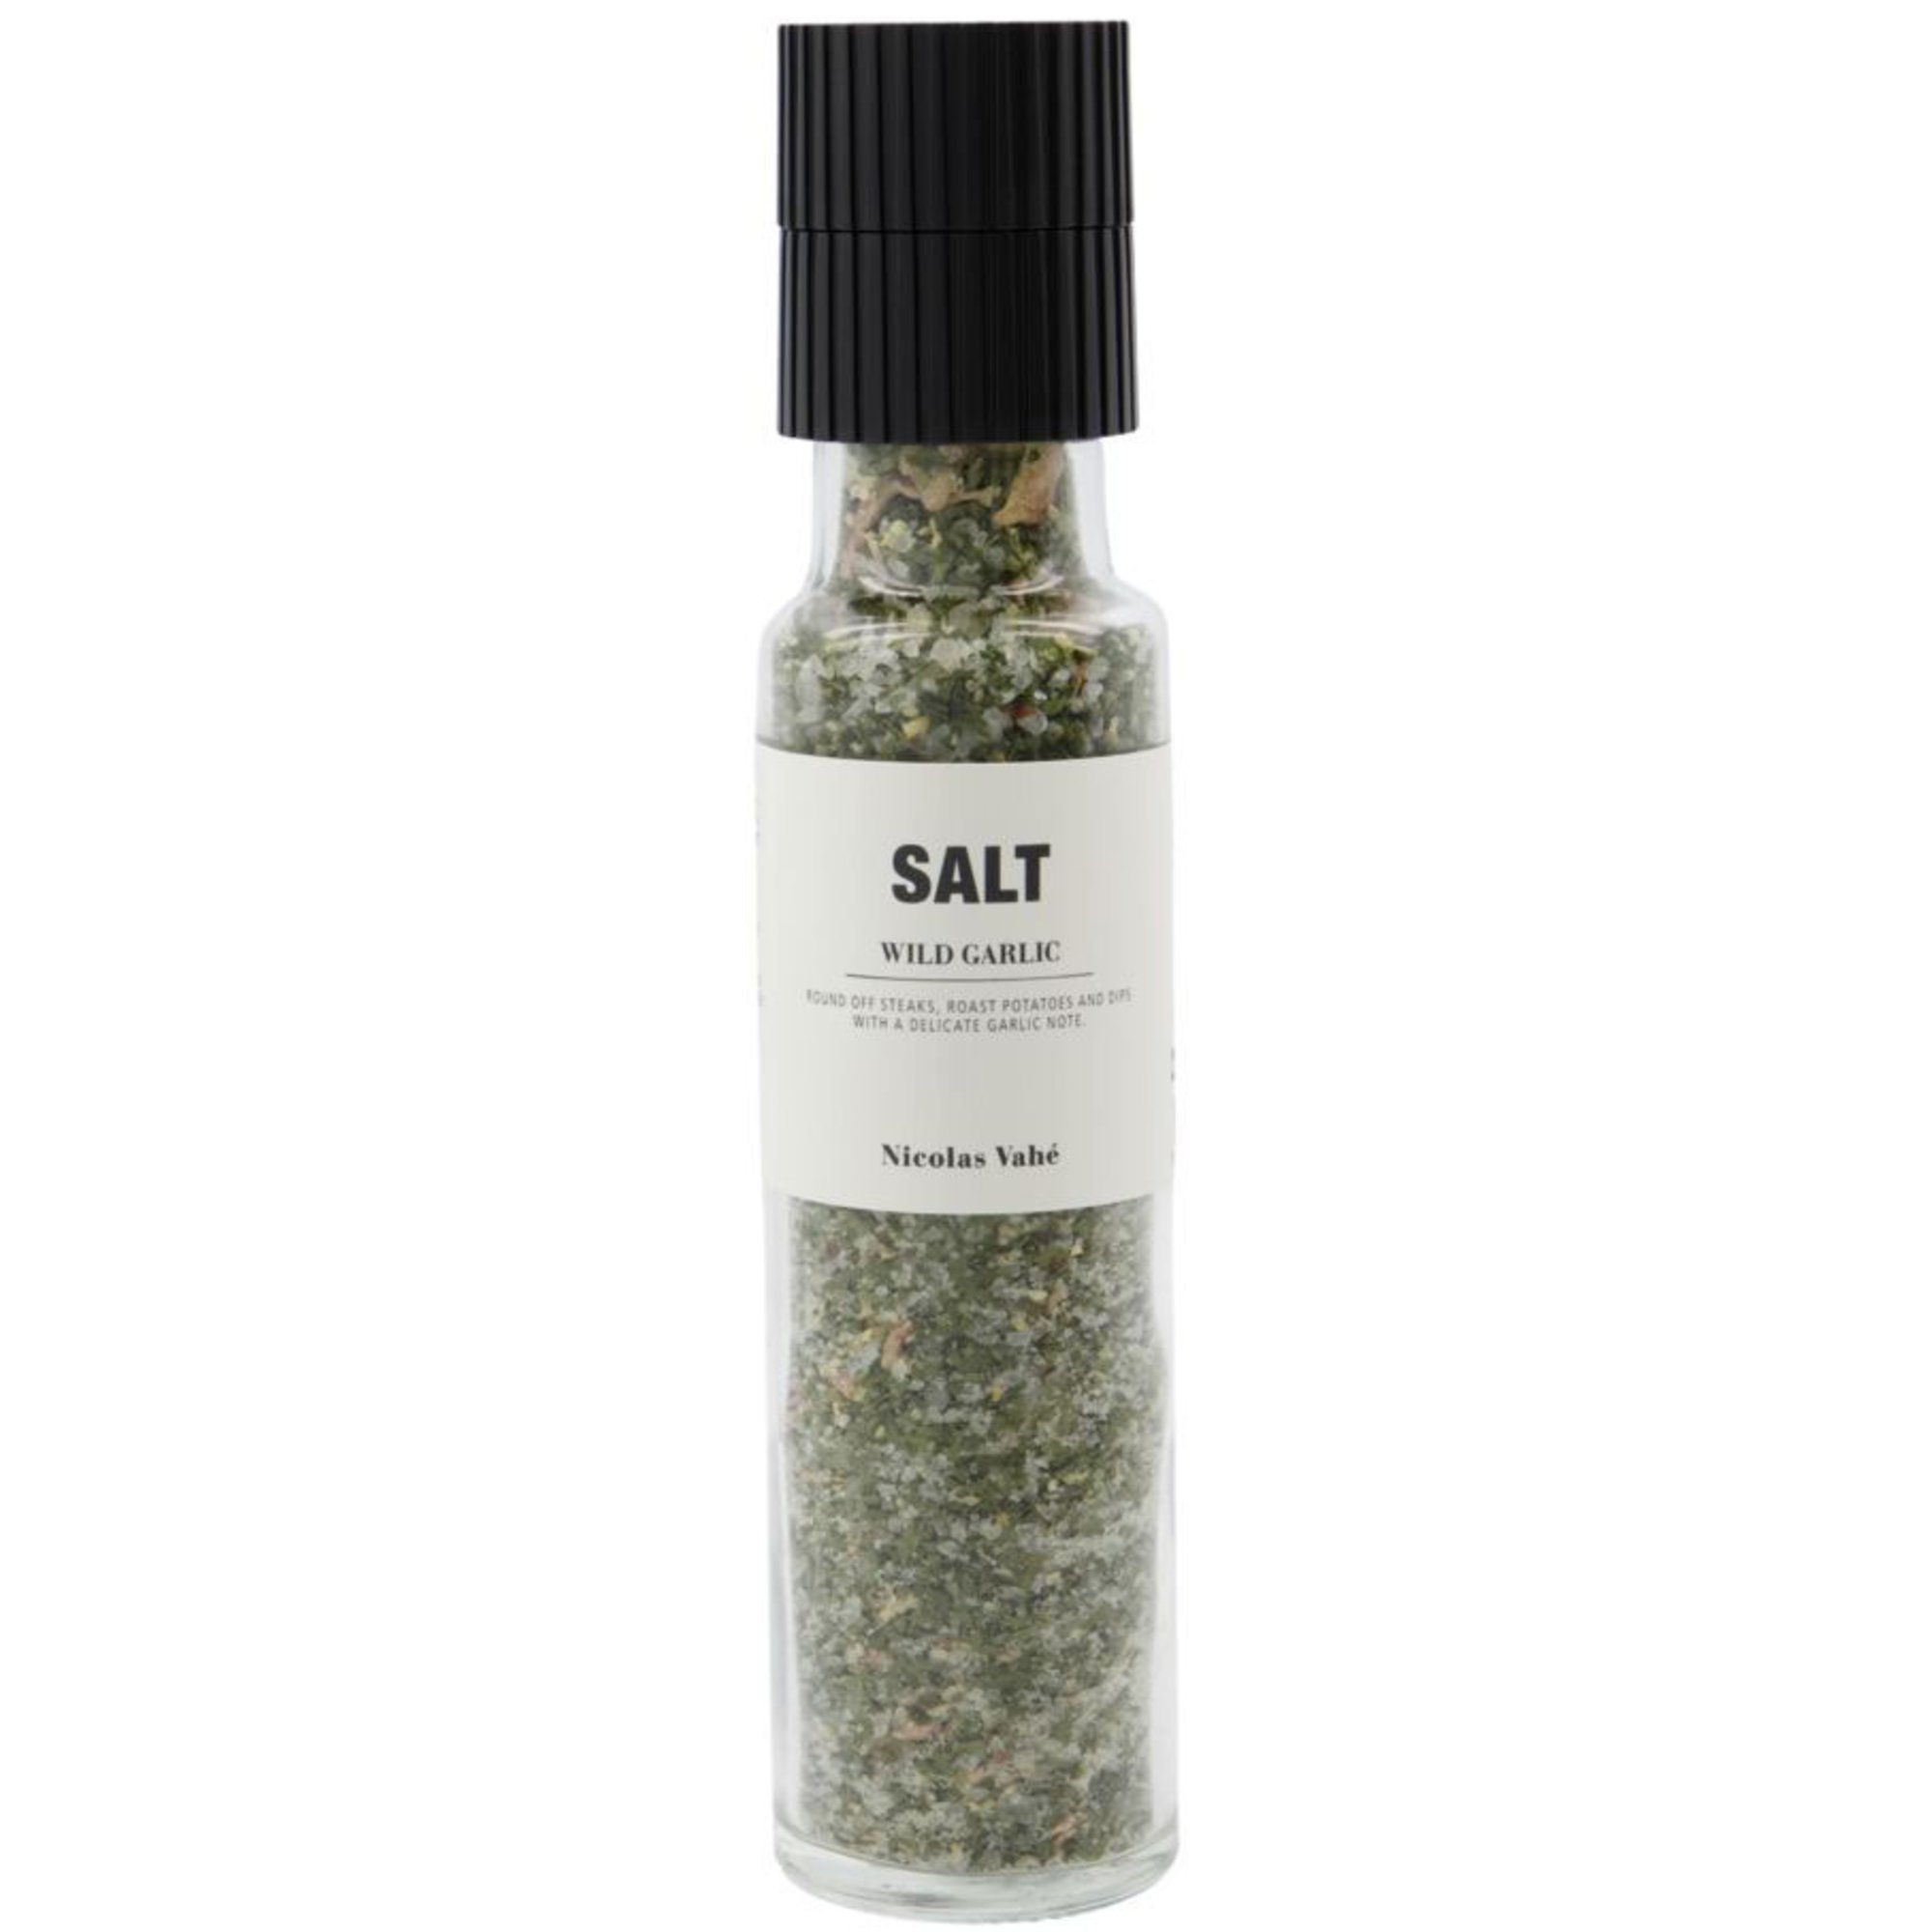 Nicolas Vahé Salt Wild Garlic 215 g